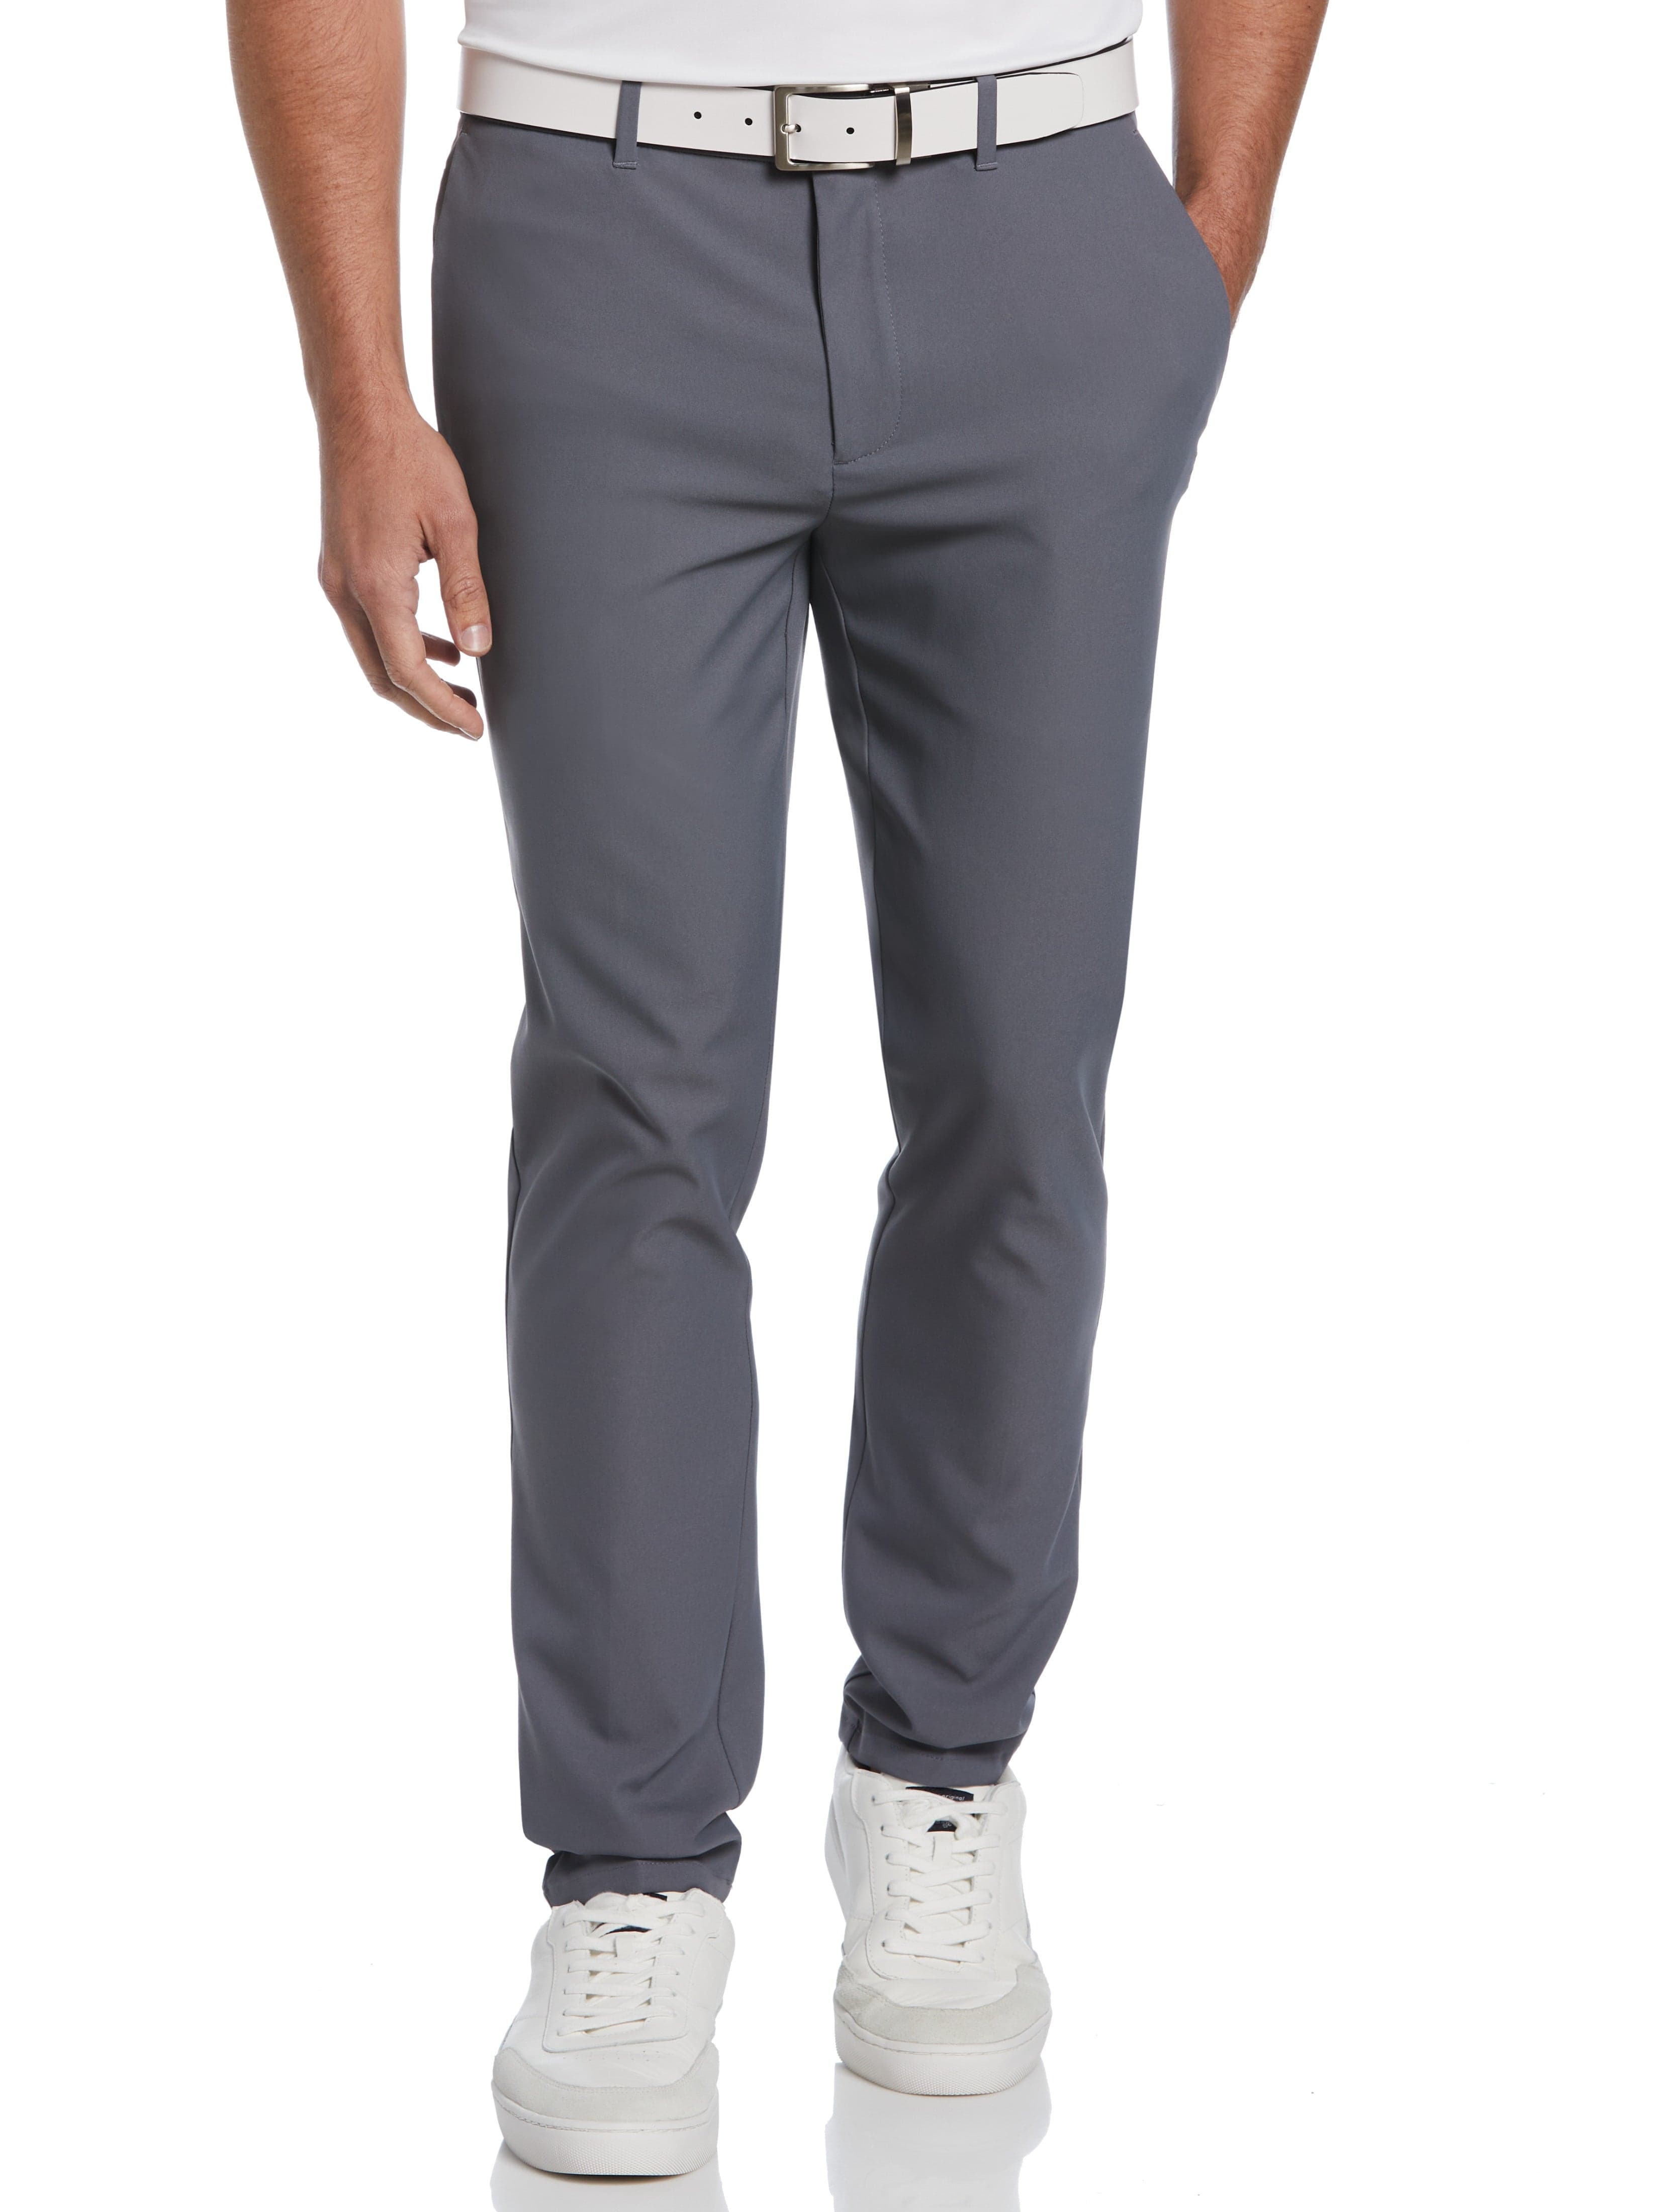 Original Penguin Mens Flat Front Solid Golf Pants, Size 38 x 34, Quiet Shade Gray, 100% Polyester | Golf Apparel Shop